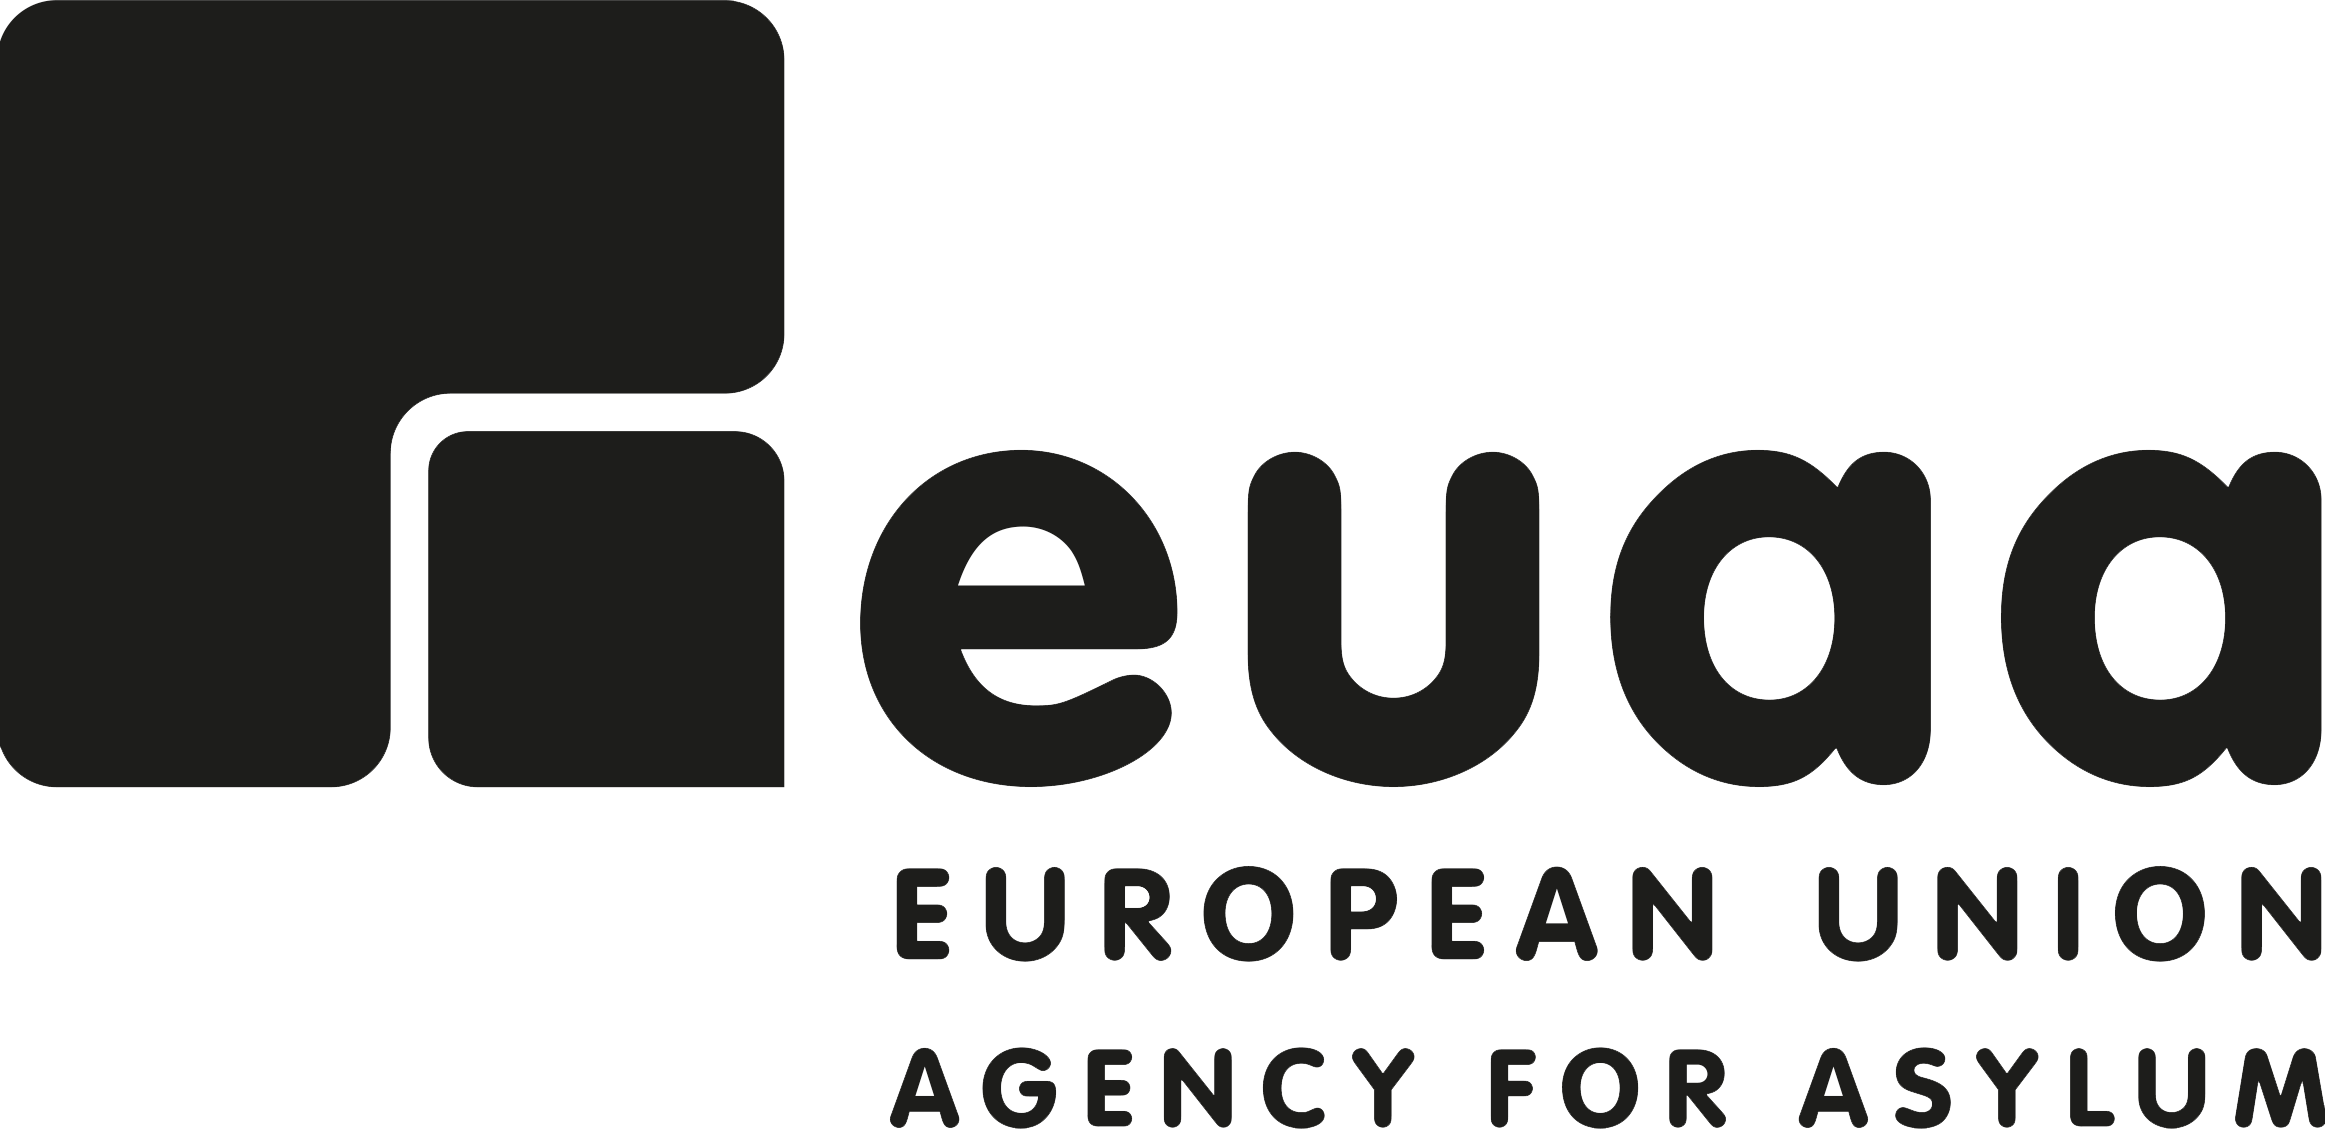 Den Europæiske Unions Asylagentur — logo i sort og hvid